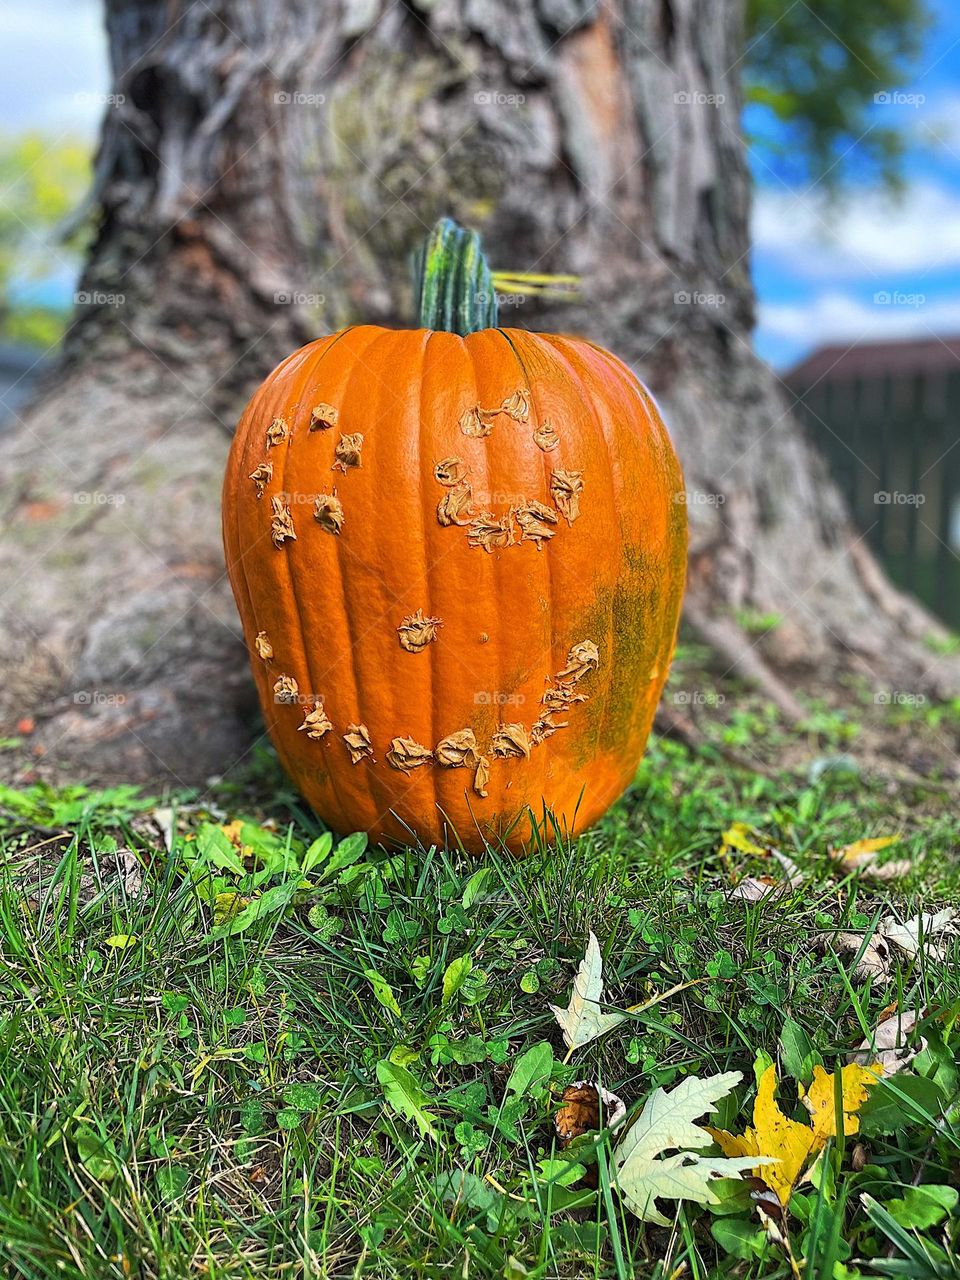 Happy Halloween pumpkin, pumpkin face filled with peanut butter, pumpkin for the wildlife, feeding the squirrels, fun pumpkin ideas, making jack o lanterns 